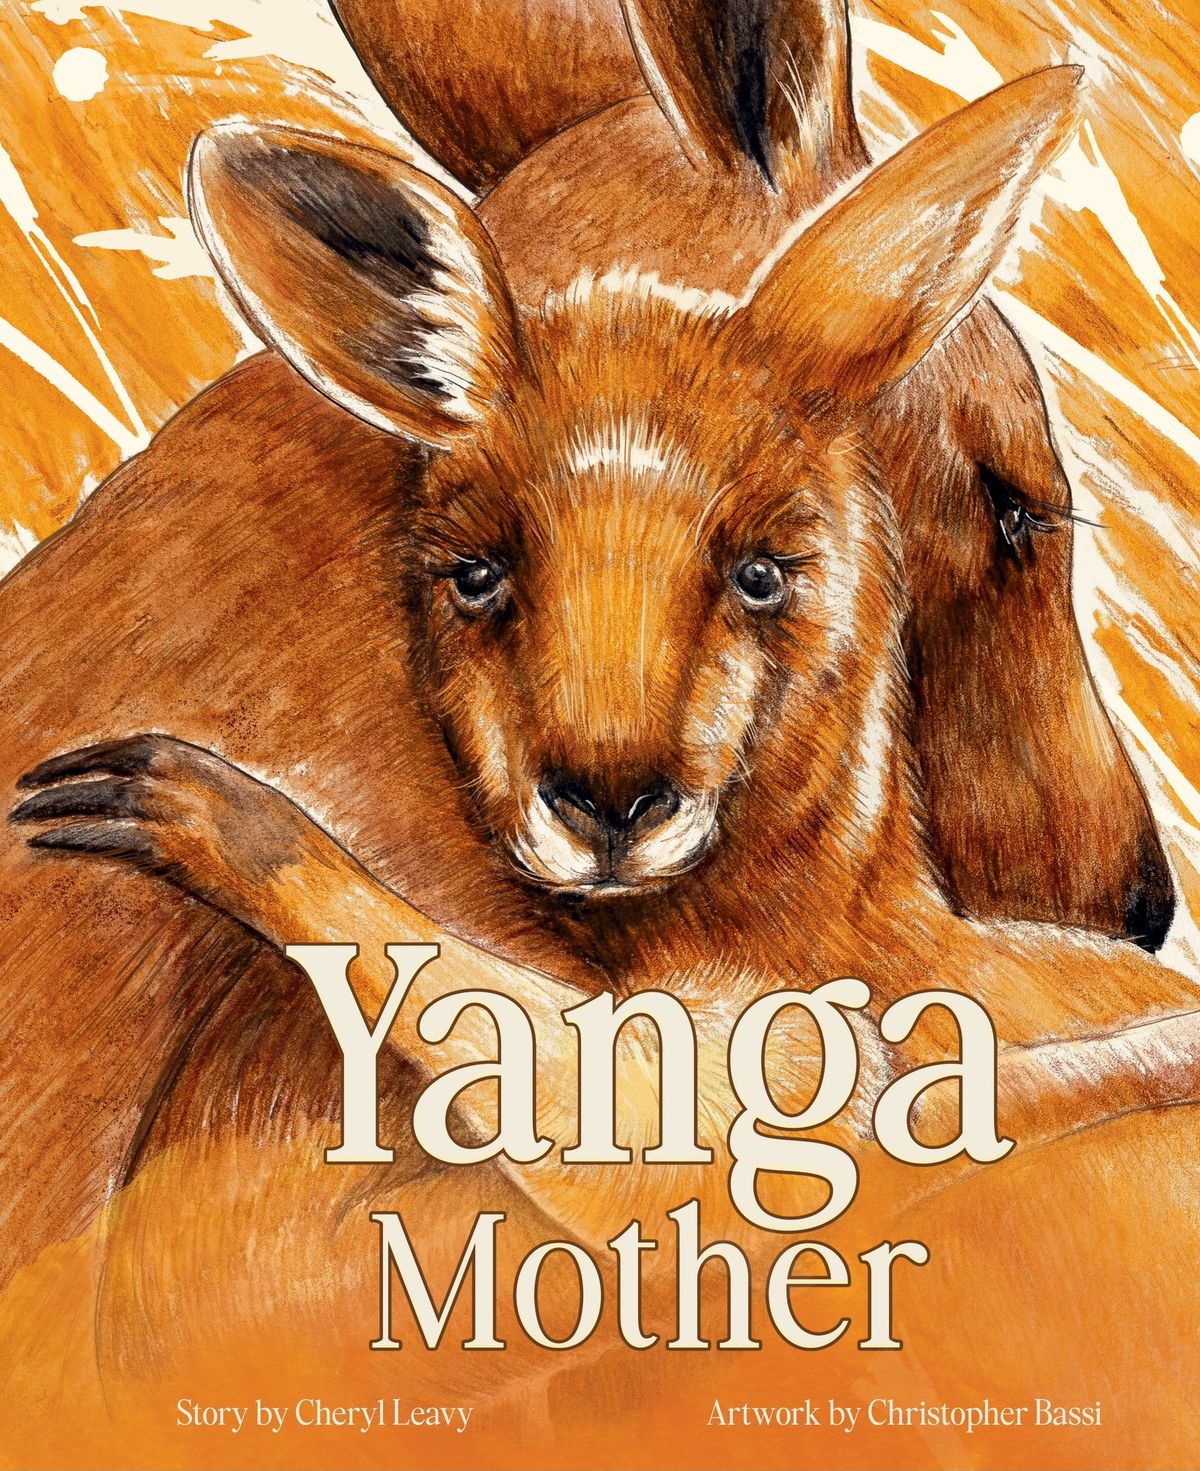 Yanga Mother - Cheryl Leavy and Christopher Bassi